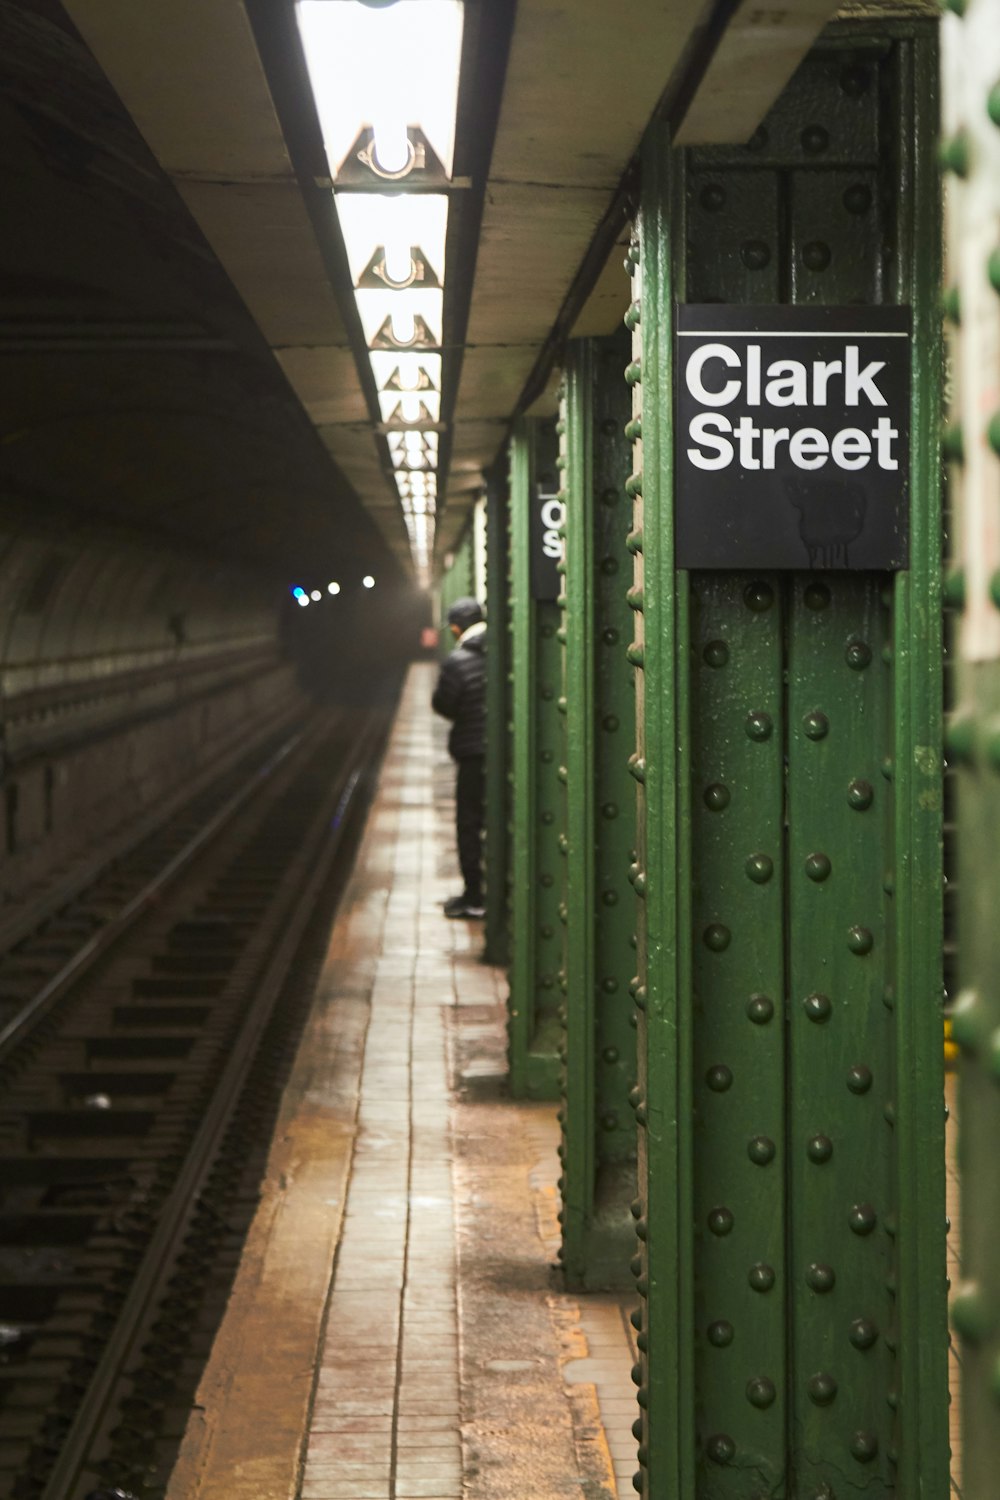 Clark Street railway during daytime